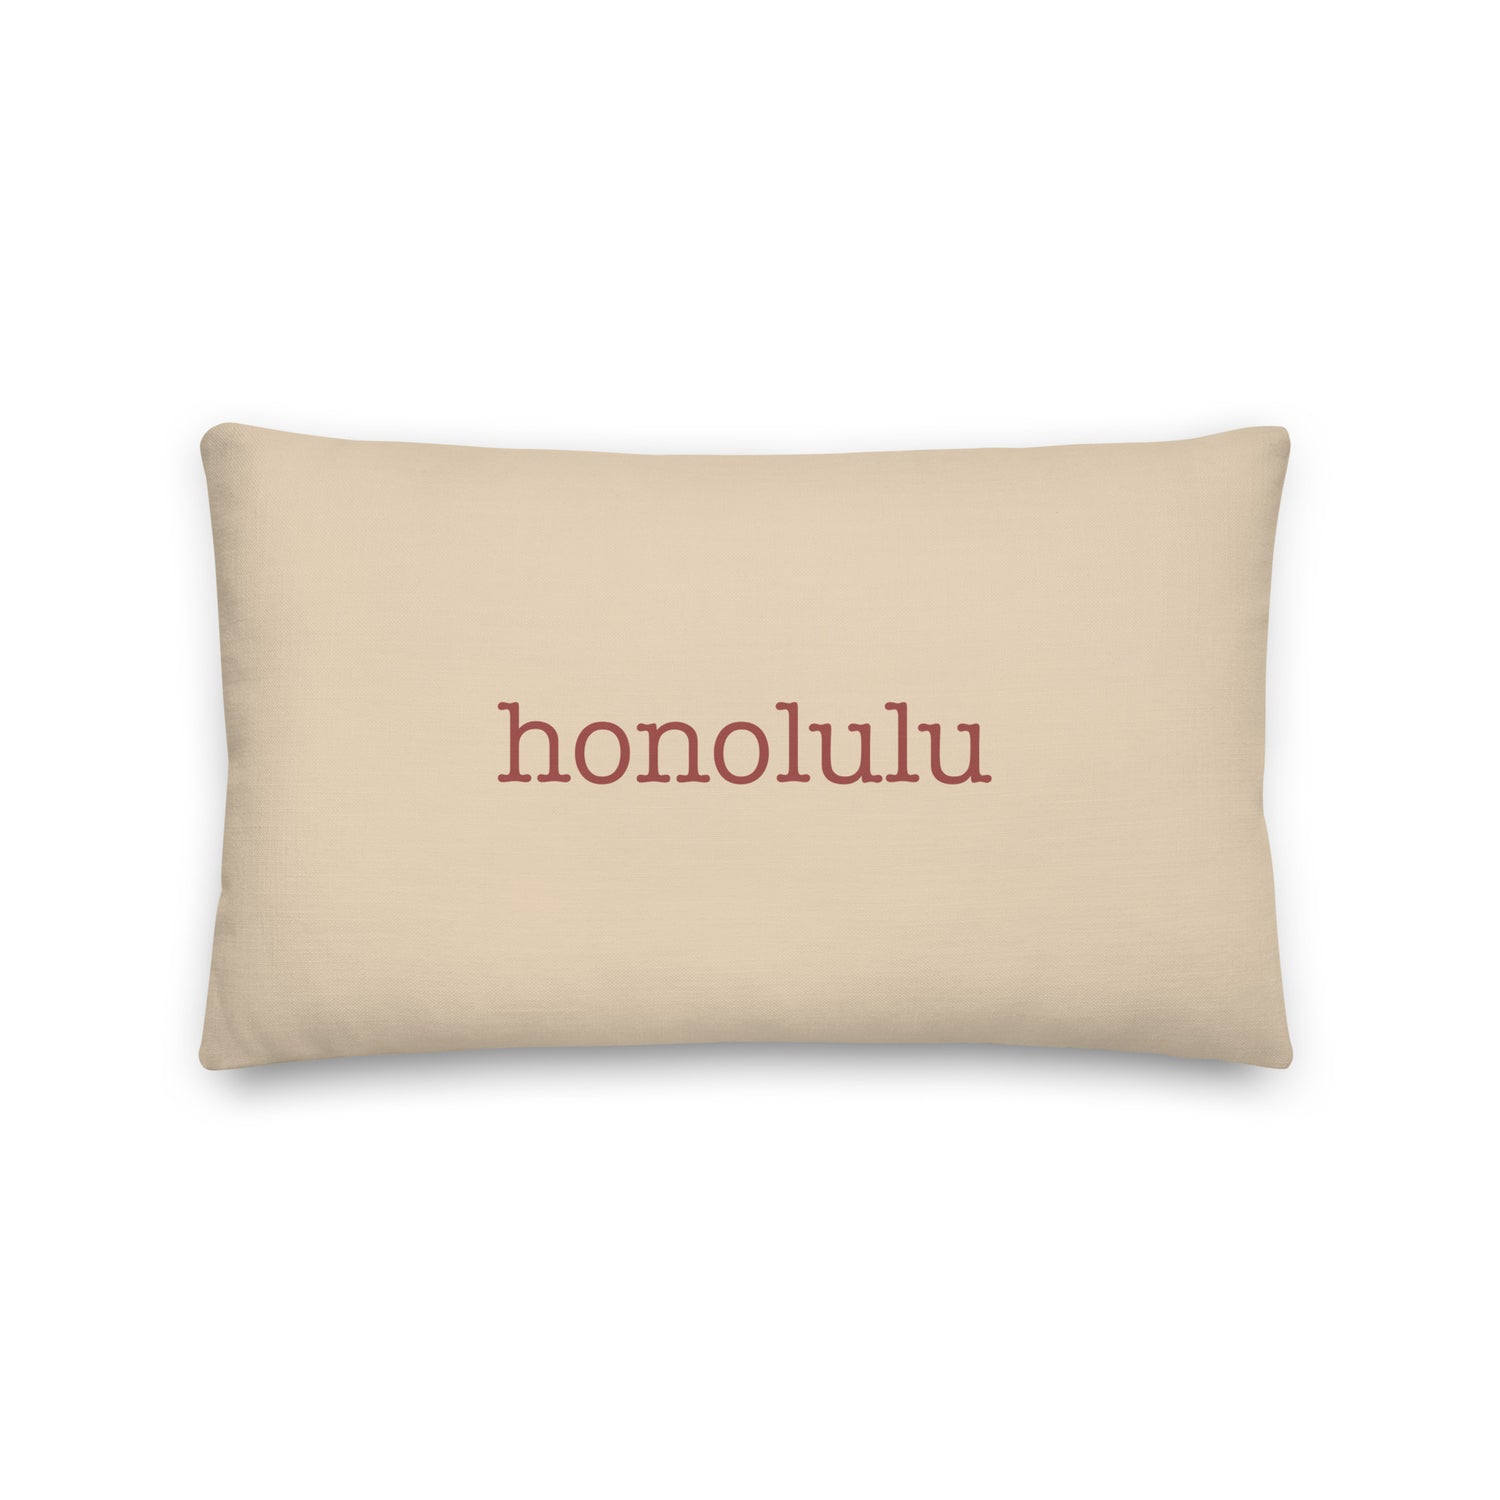 Honolulu Hawaii Pillows and Blankets • HNL Airport Code